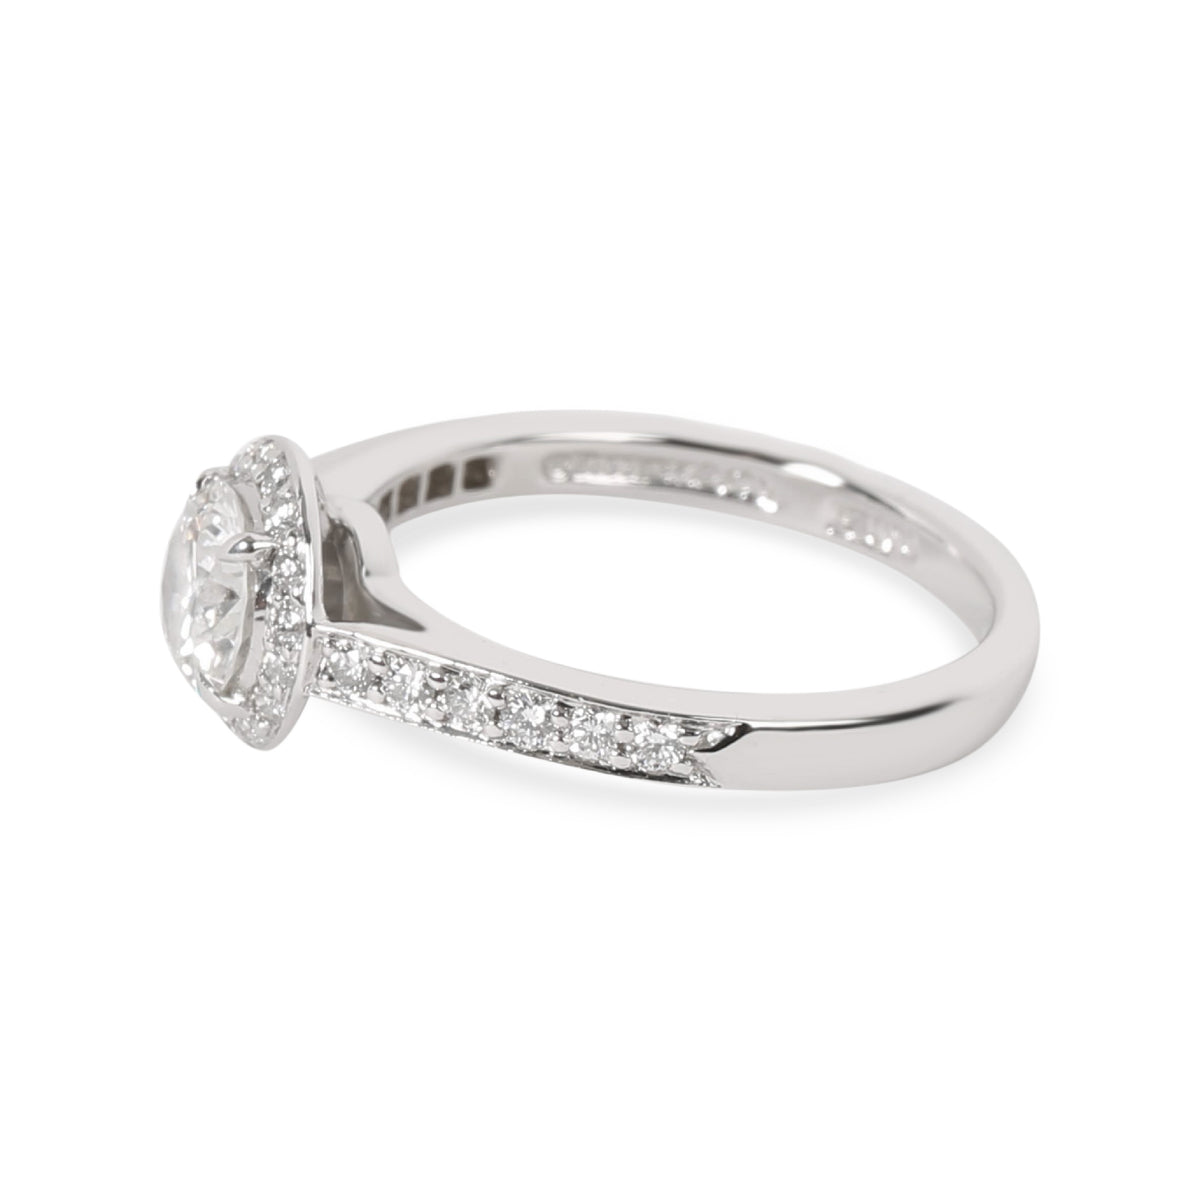 Tiffany & Co. Halo Diamond Engagement Ring in  Platinum 0.71 CTW